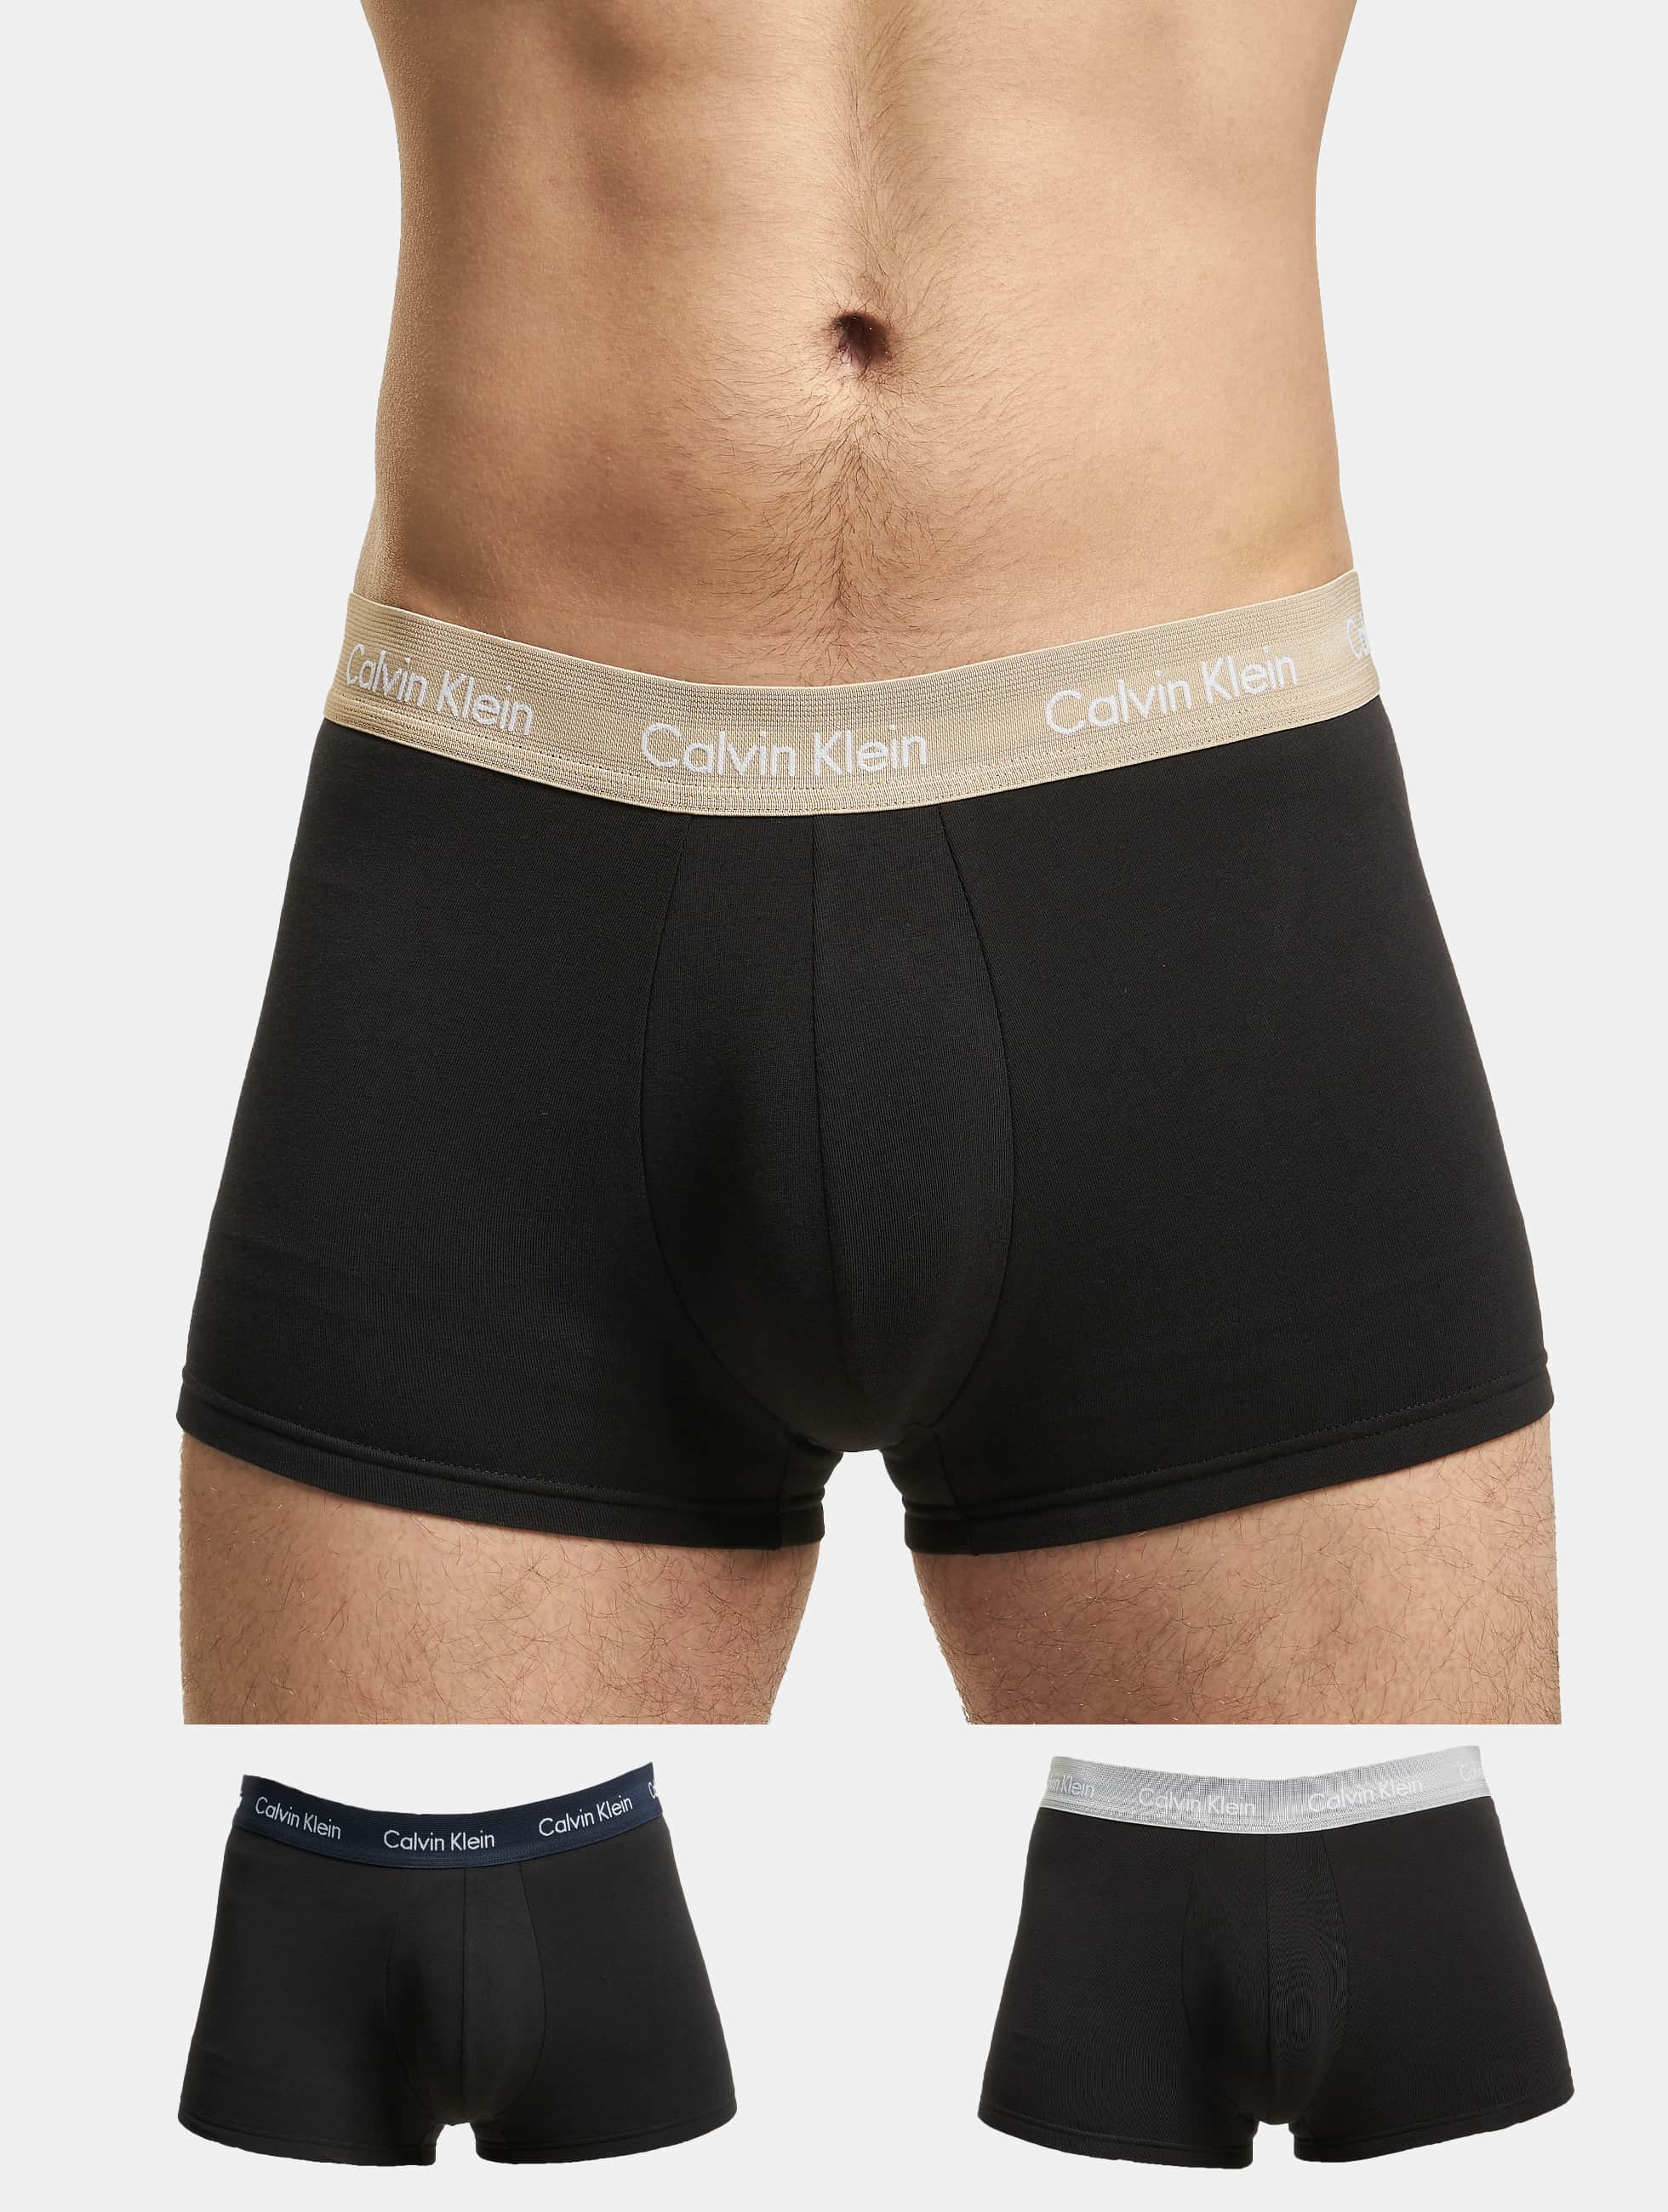 Calvin Klein Underwear / Beachwear / Boxer Short 3er Pack Low Rise in black  957643